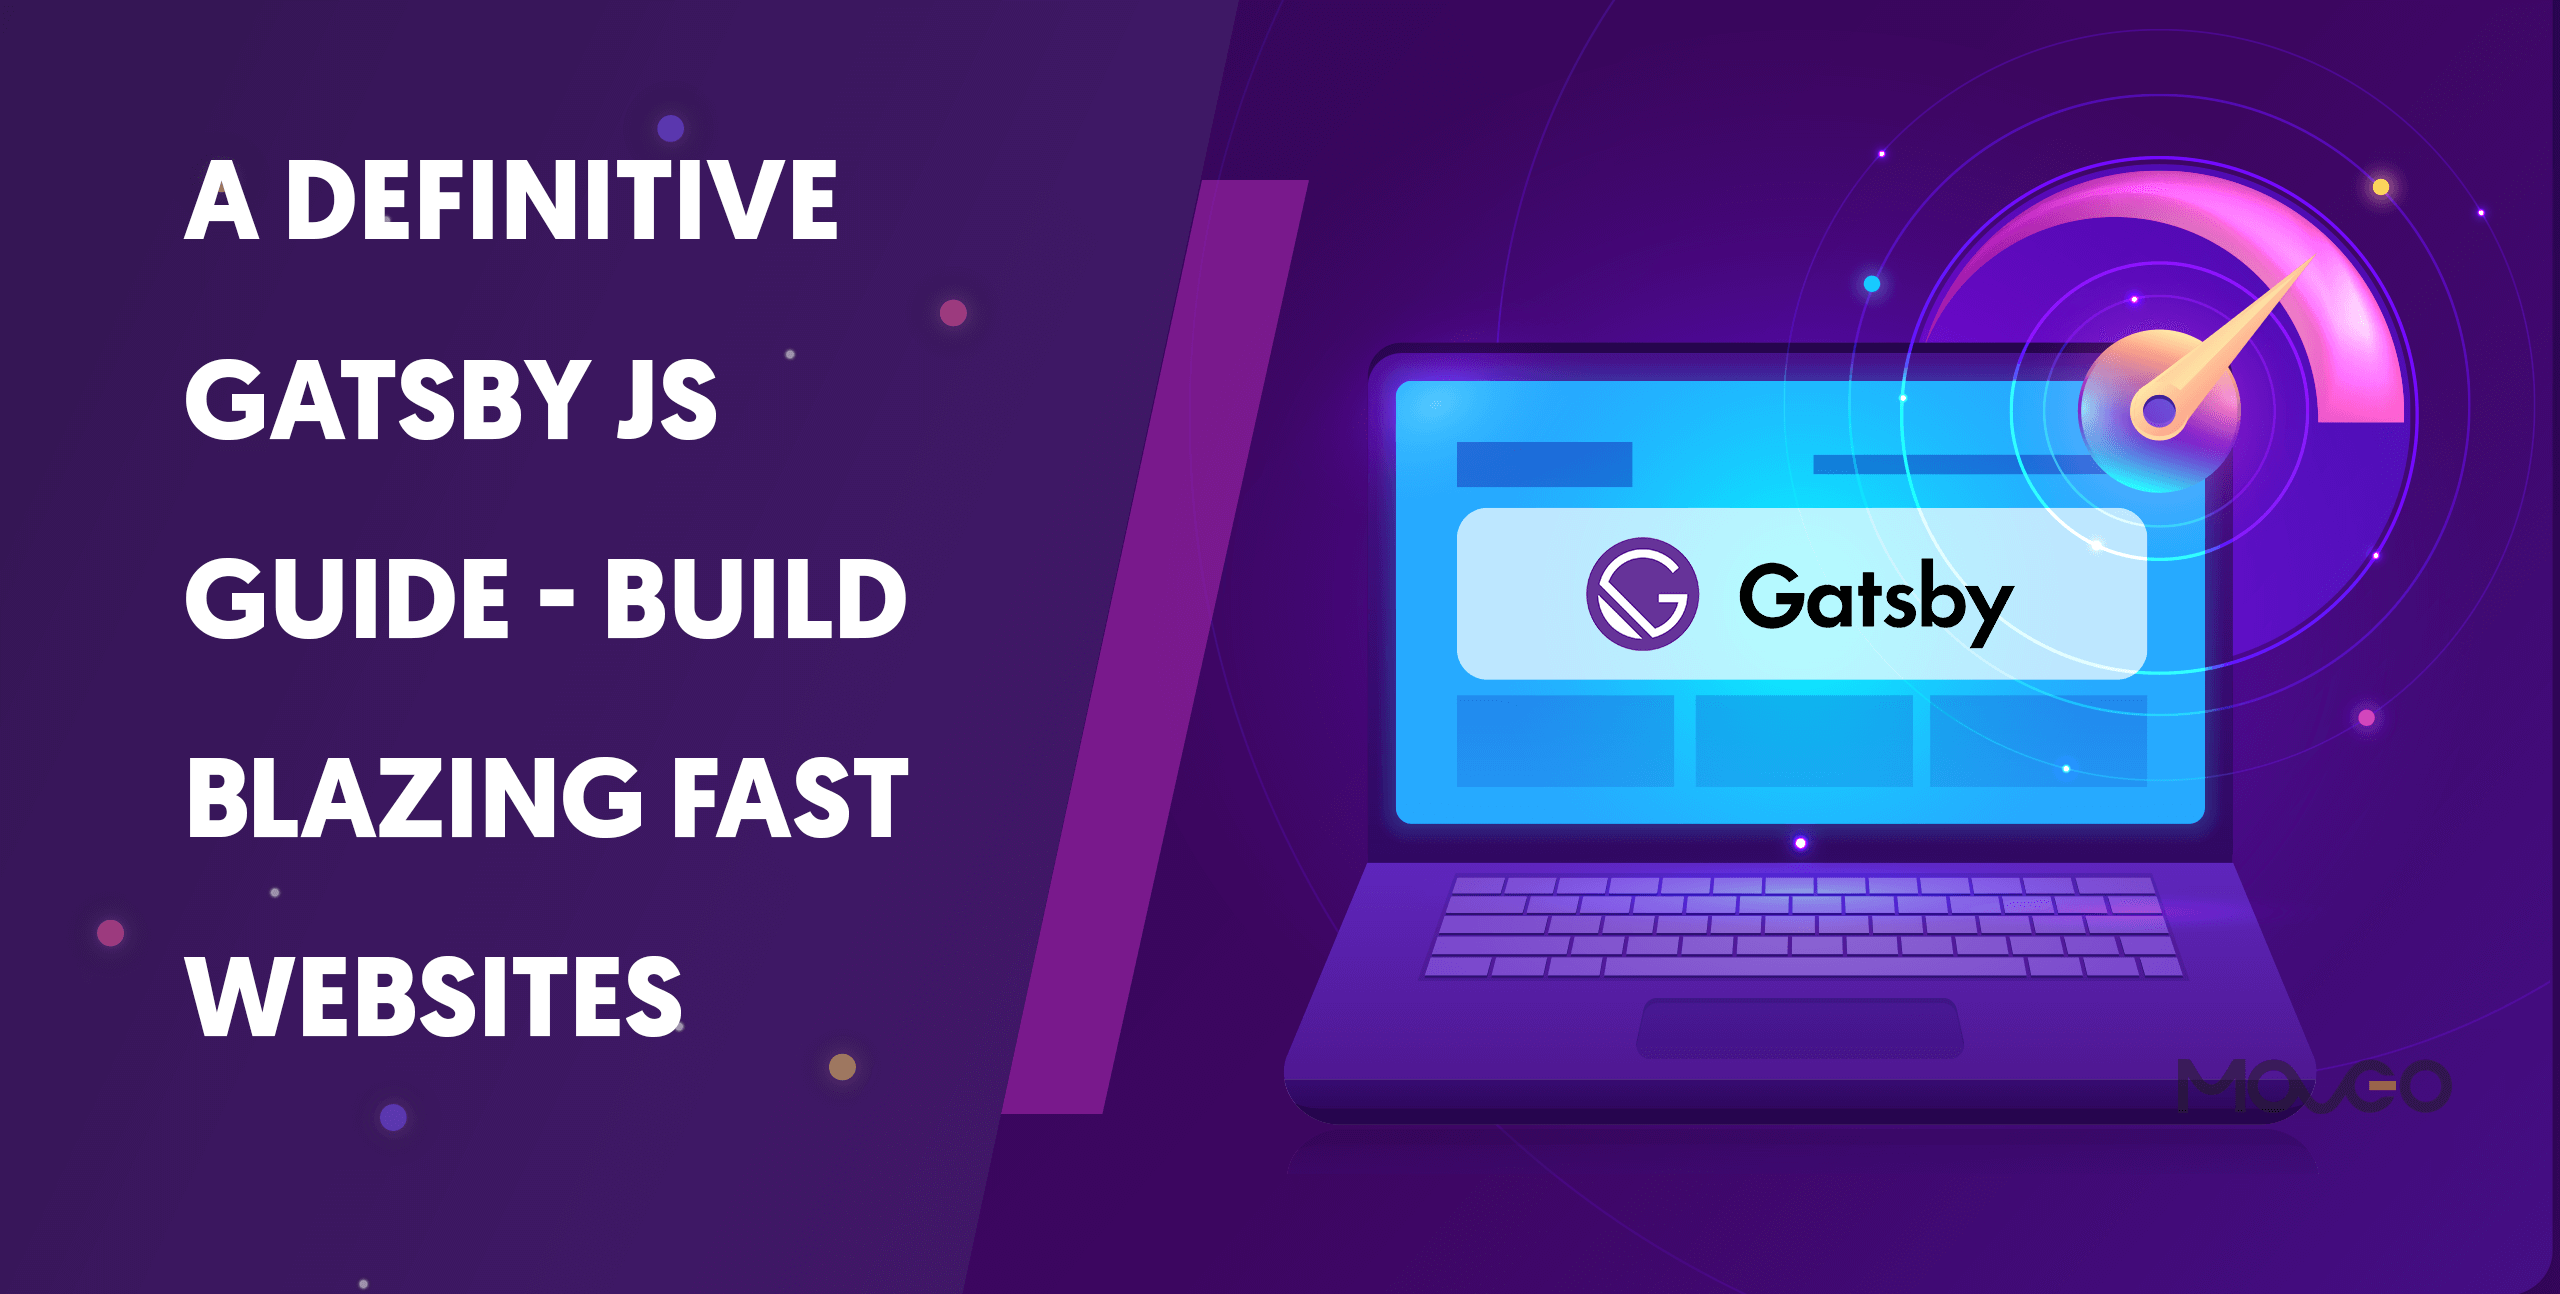 a definitive gatsby js guide - build blazing fast websites